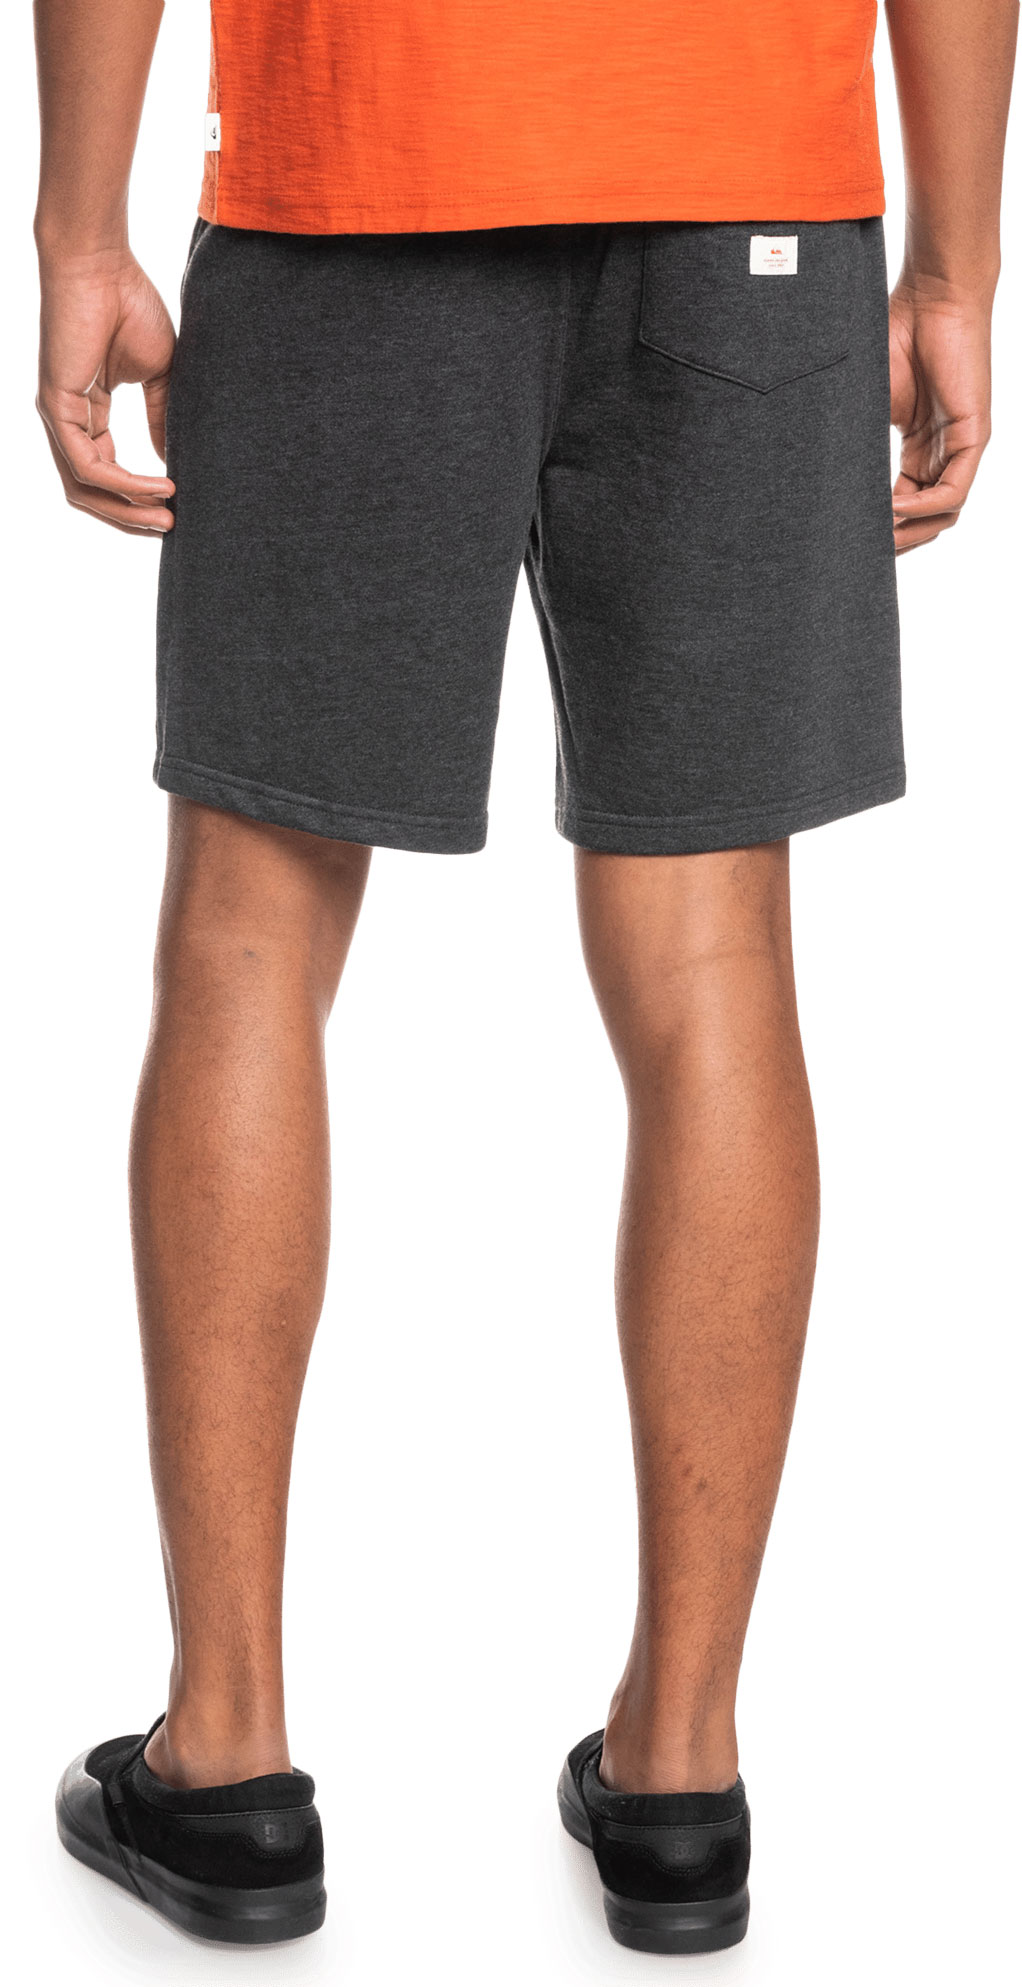 Men’s sweat shorts